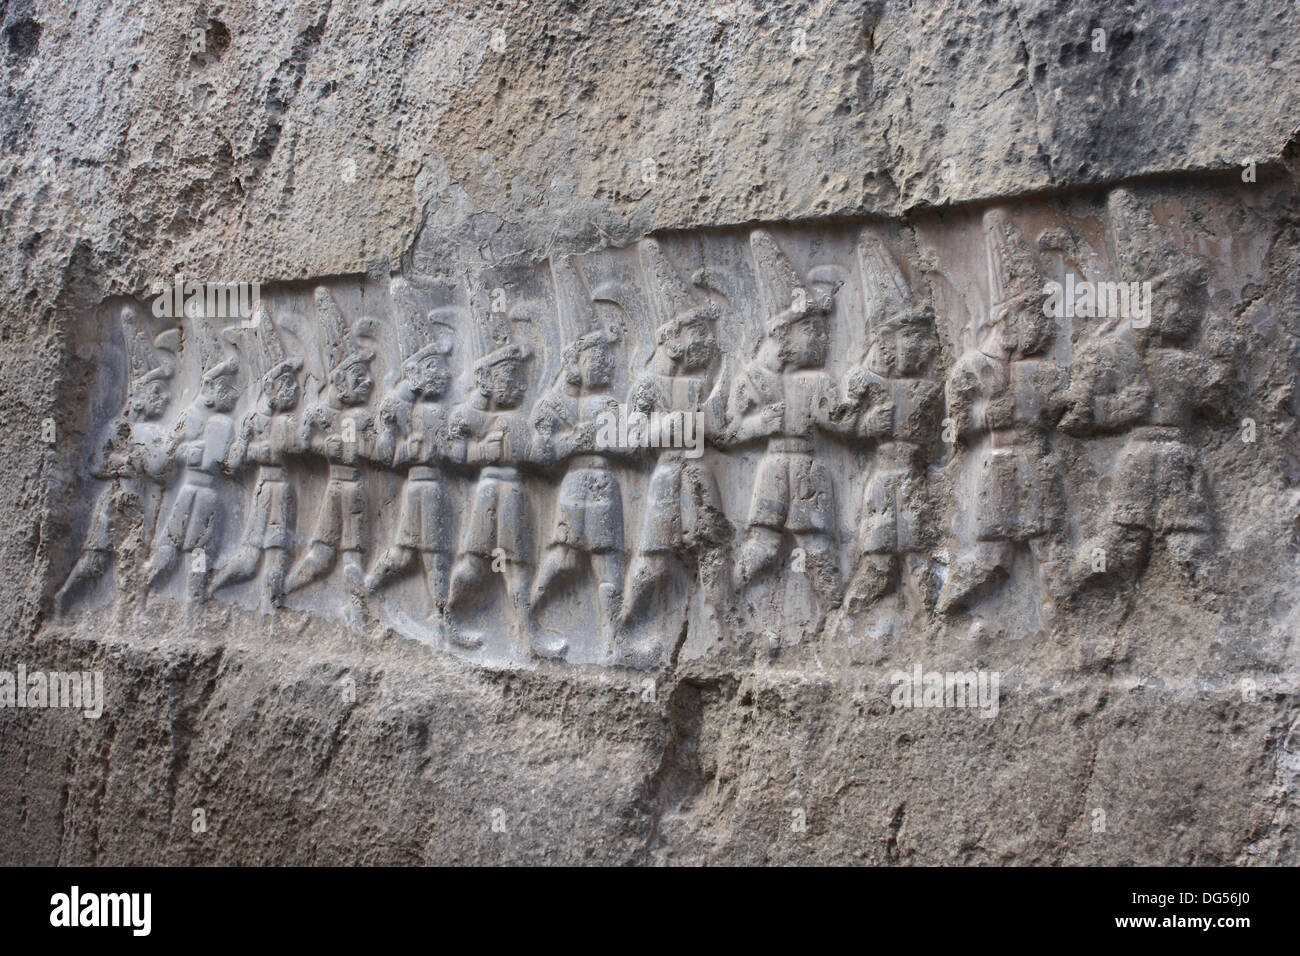 Carving of the Gods at the Hittite sanctuary of Yazilikaya in Turkey ...